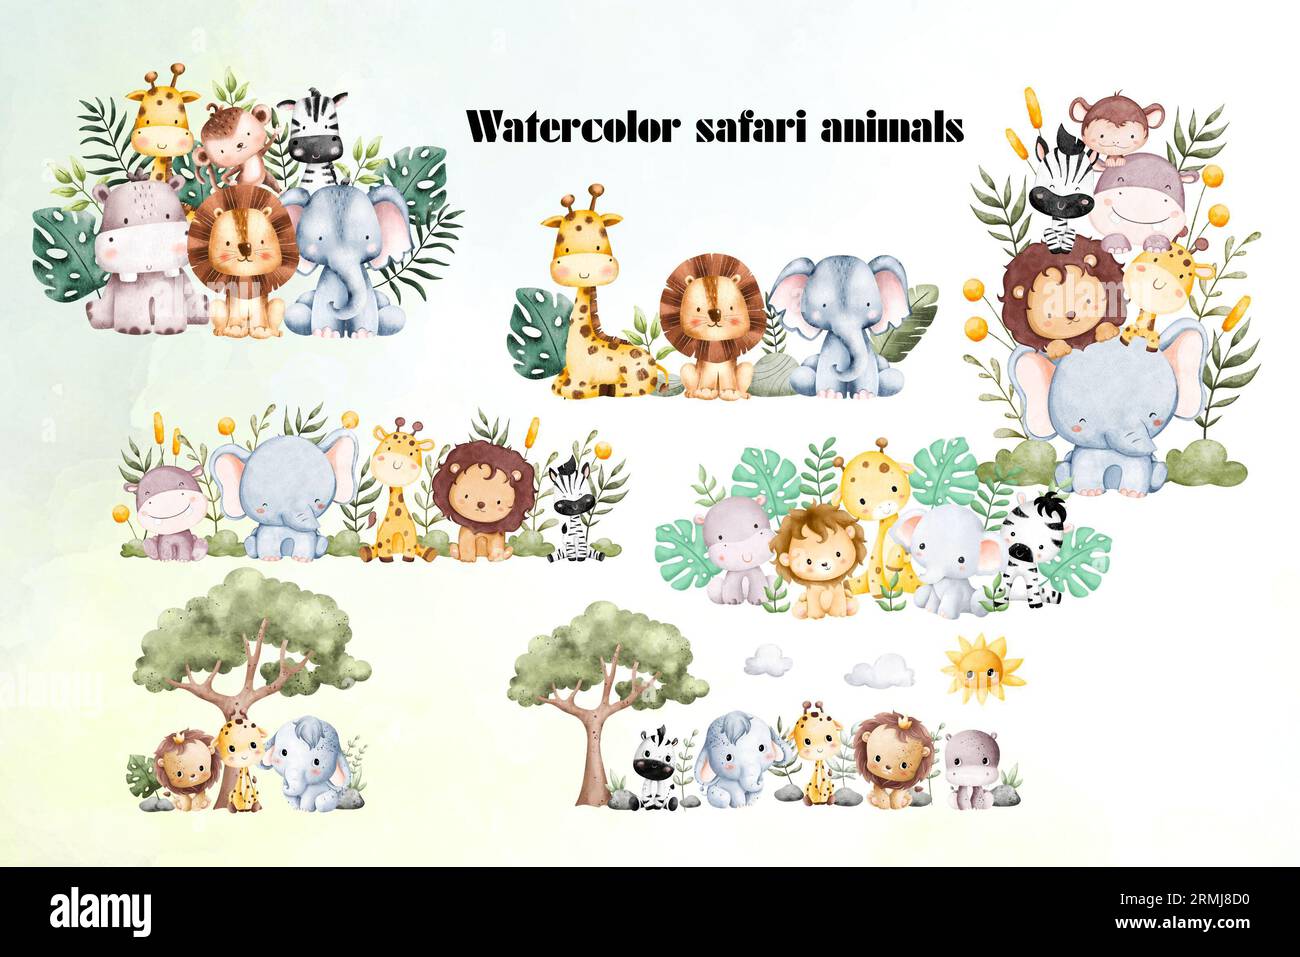 Watercolor safari animals collection Stock Photo